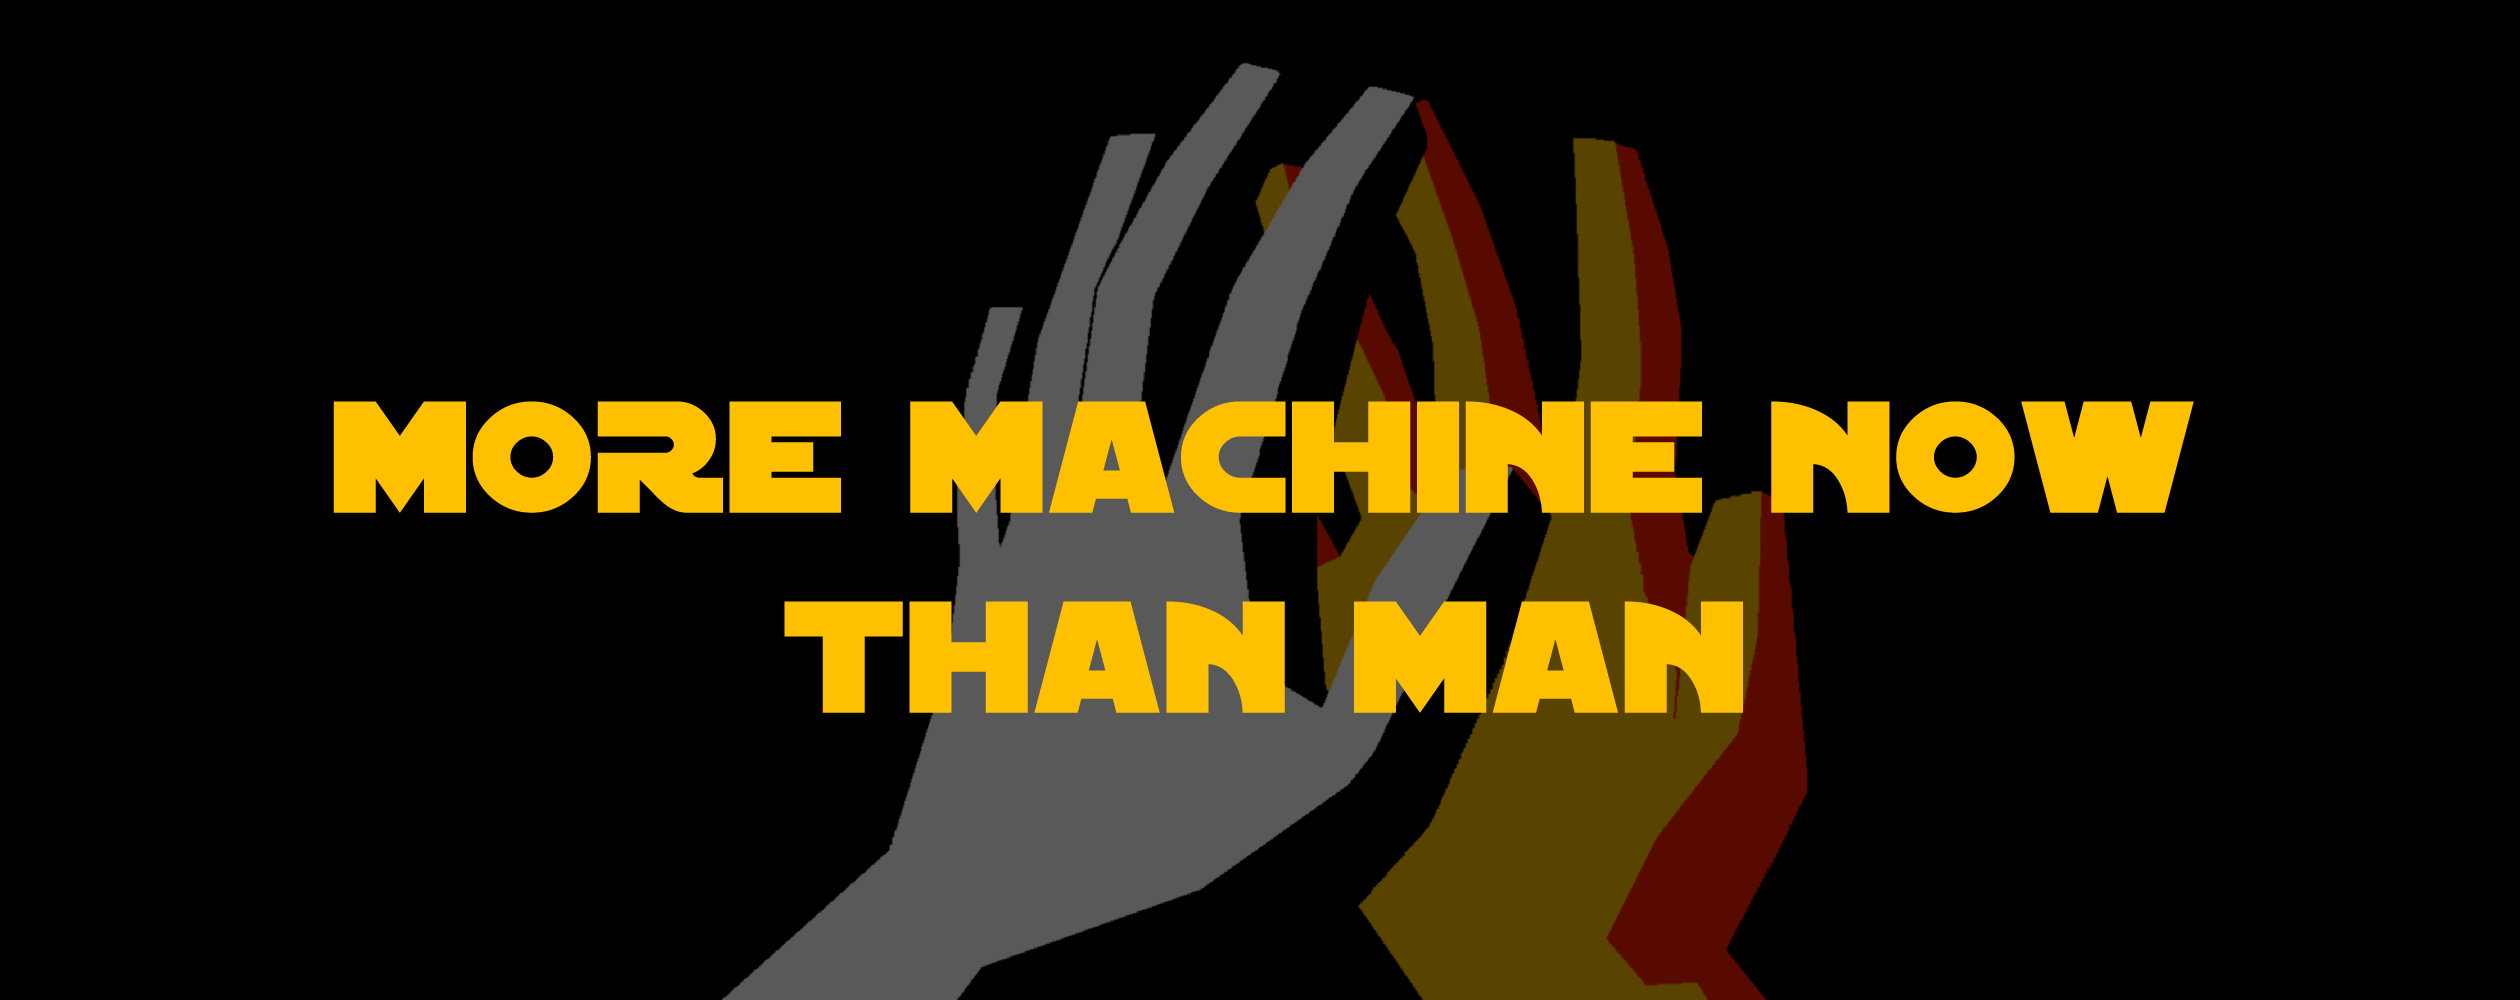 More Machine Now Than Man